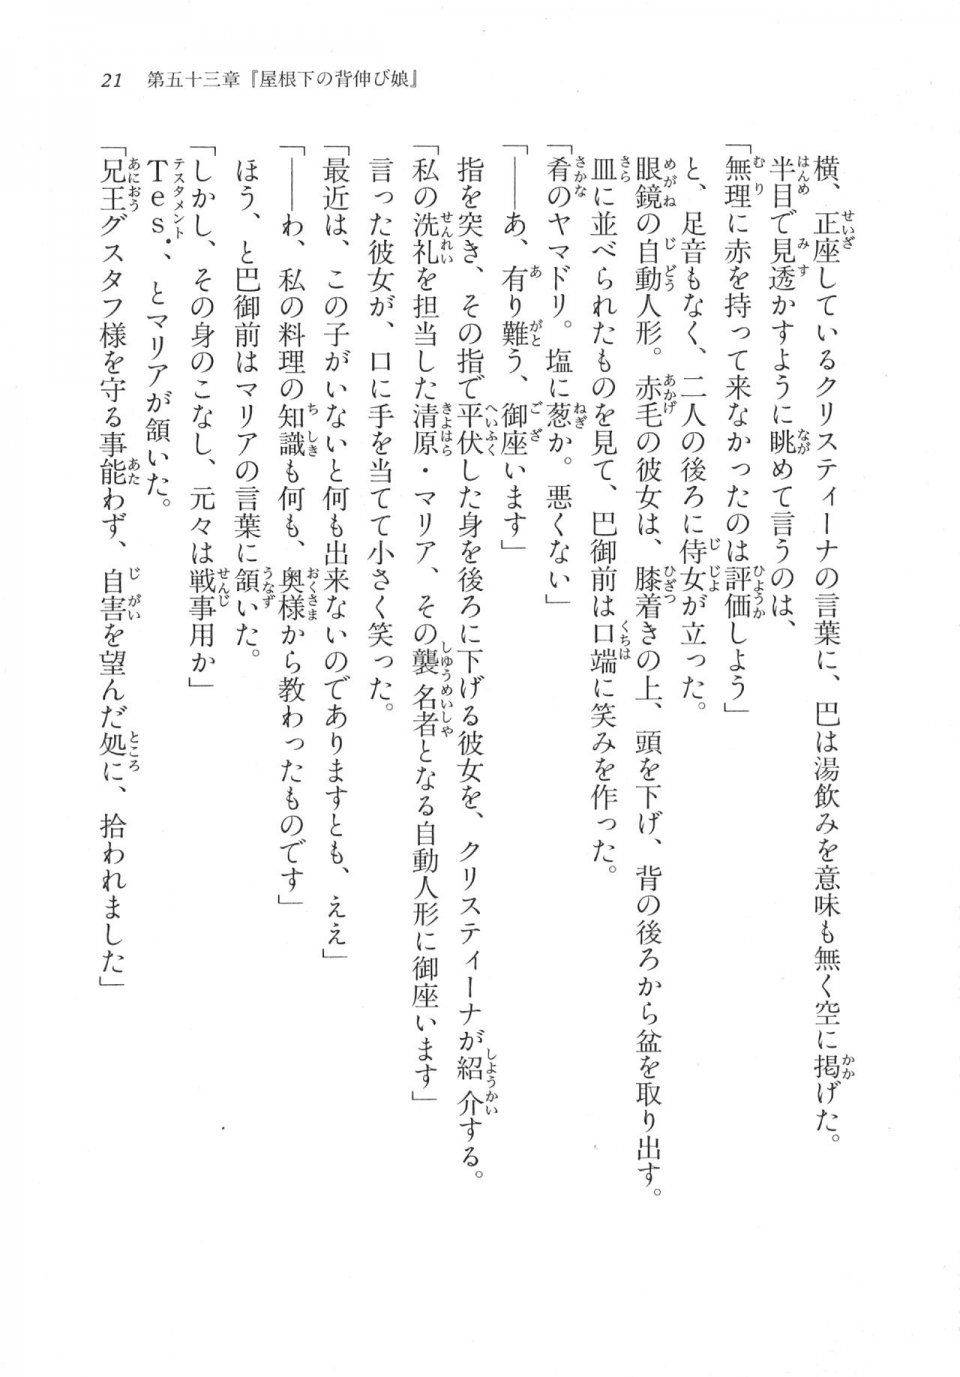 Kyoukai Senjou no Horizon LN Vol 18(7C) Part 1 - Photo #21